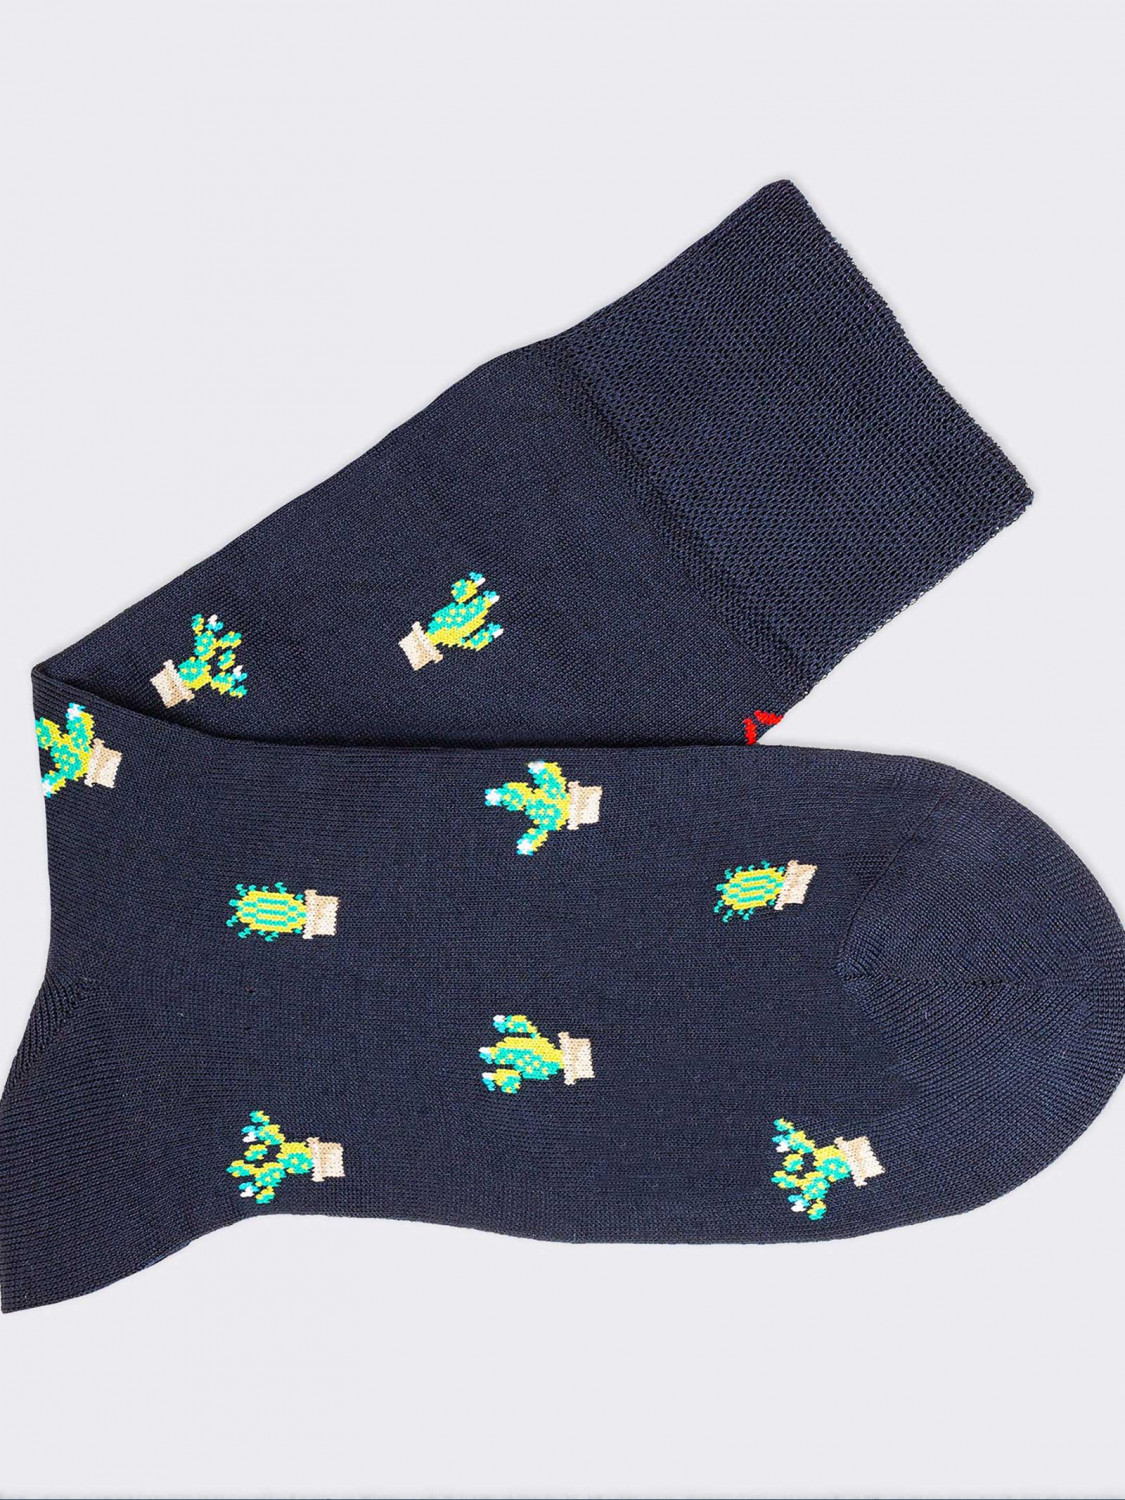 Cactus pattern Men's Crew Socks